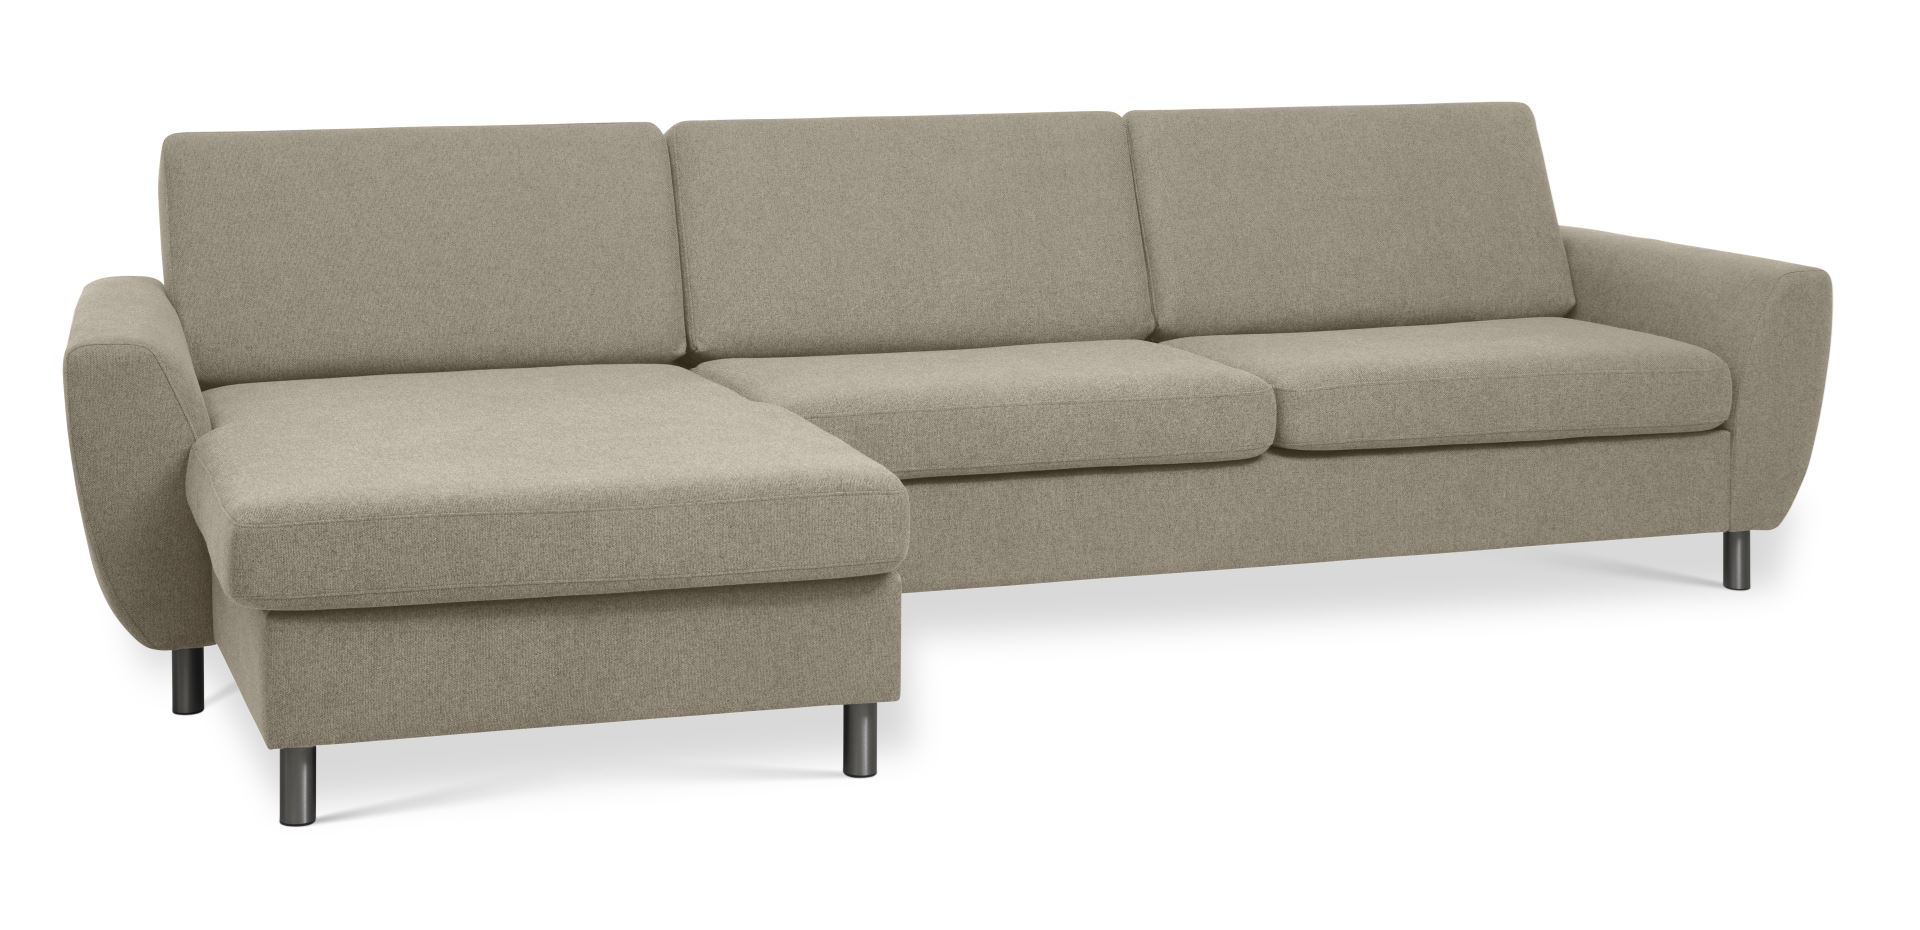 Billede af Wendy set 8 3D XL sofa, m. chaiselong - antelope beige polyester stof og børstet aluminium